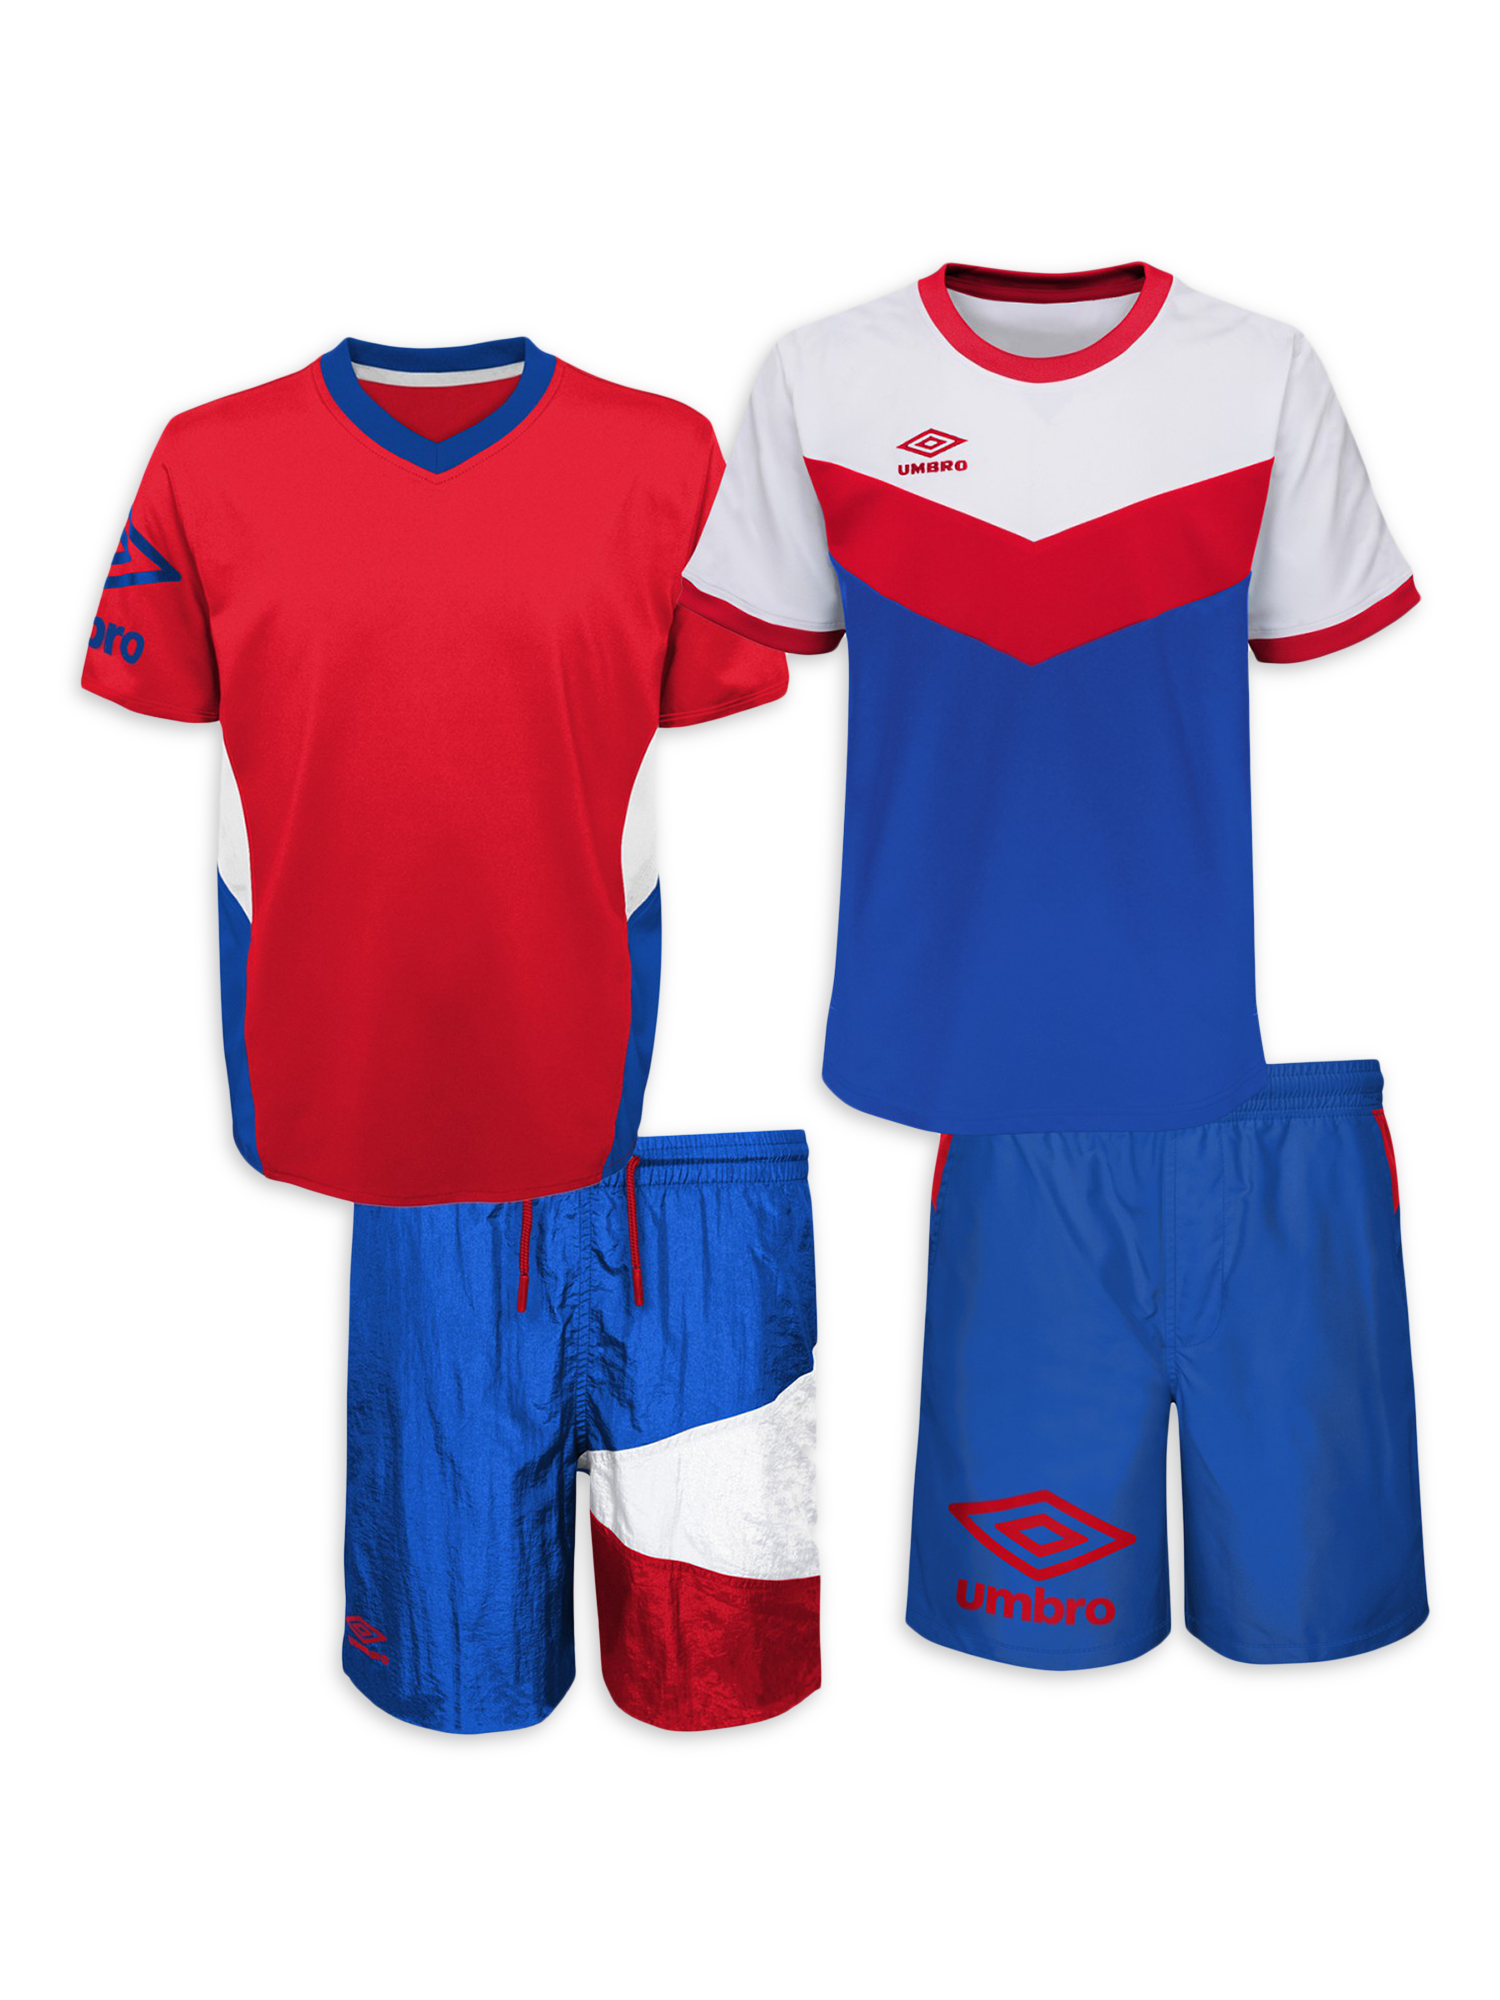 Umbro Boys Retro Diamond Soccer Jerseys and Shorts 4-Piece Outfit Set, Sizes 4-18 - image 1 of 1